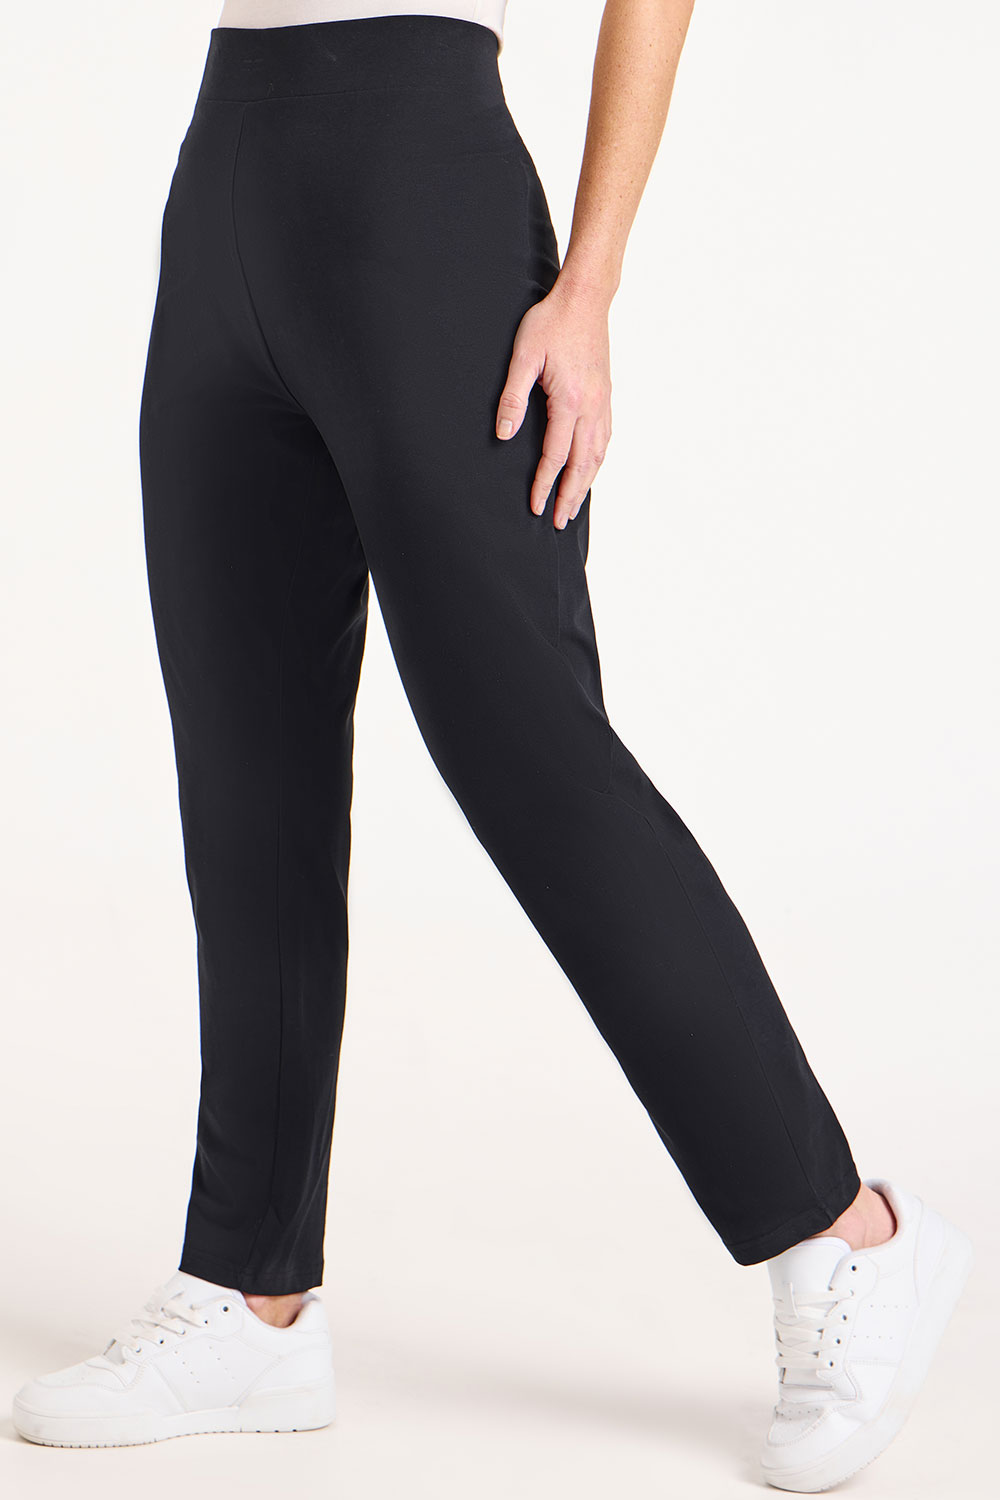 Jockey Women's Yoga Pants, Size M, Black, Knee Length, Pull On, Slim/  Stretch